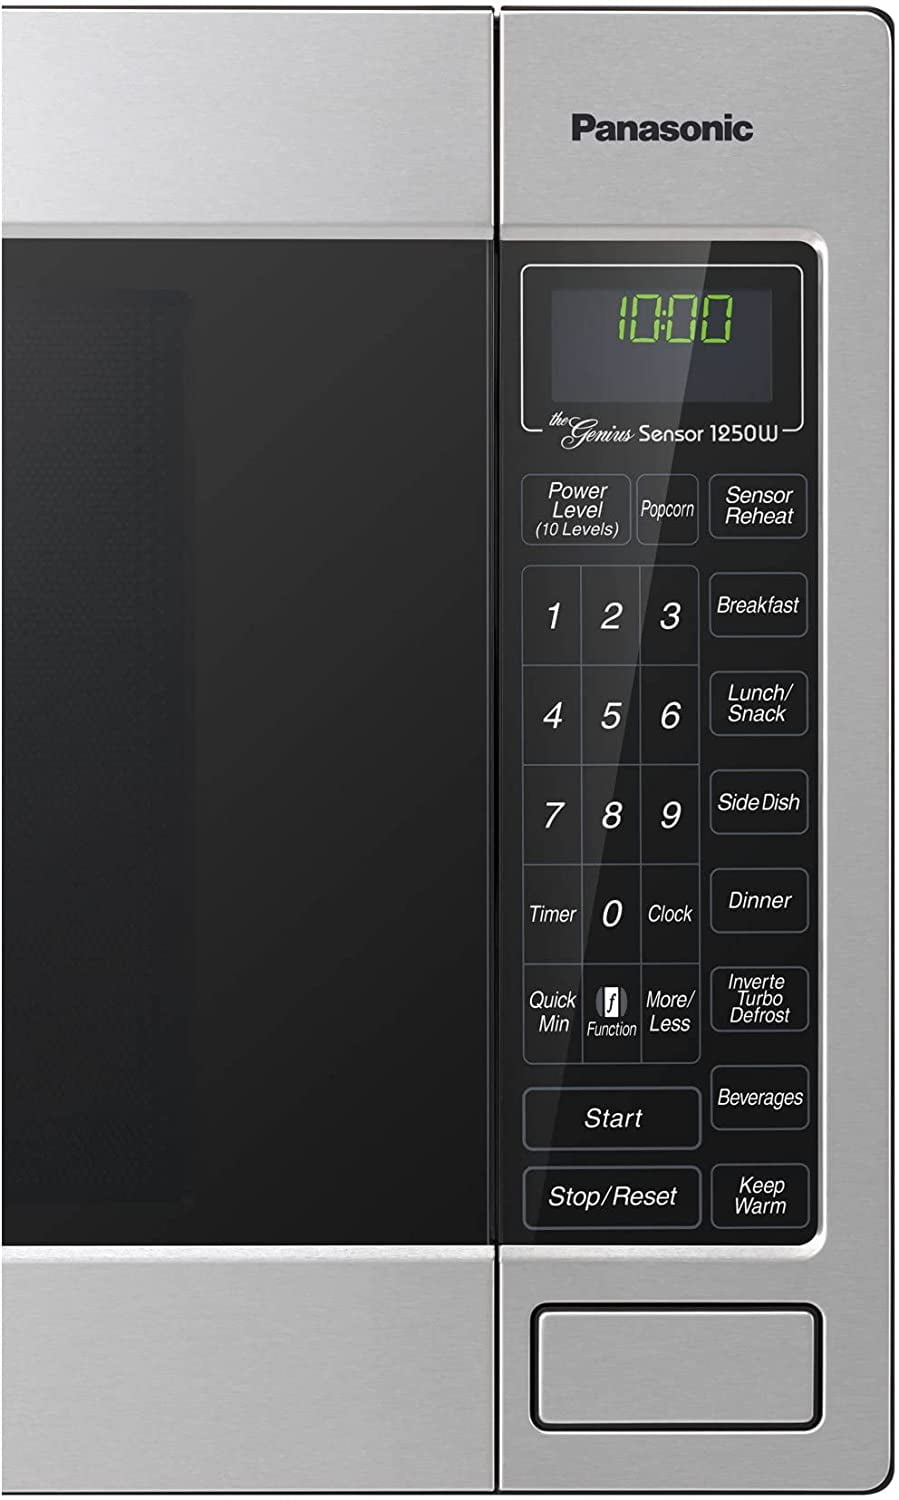 Panasonic NN-T945SF 2.2 cu. ft. 1250W Stainless Steel Microwave Oven